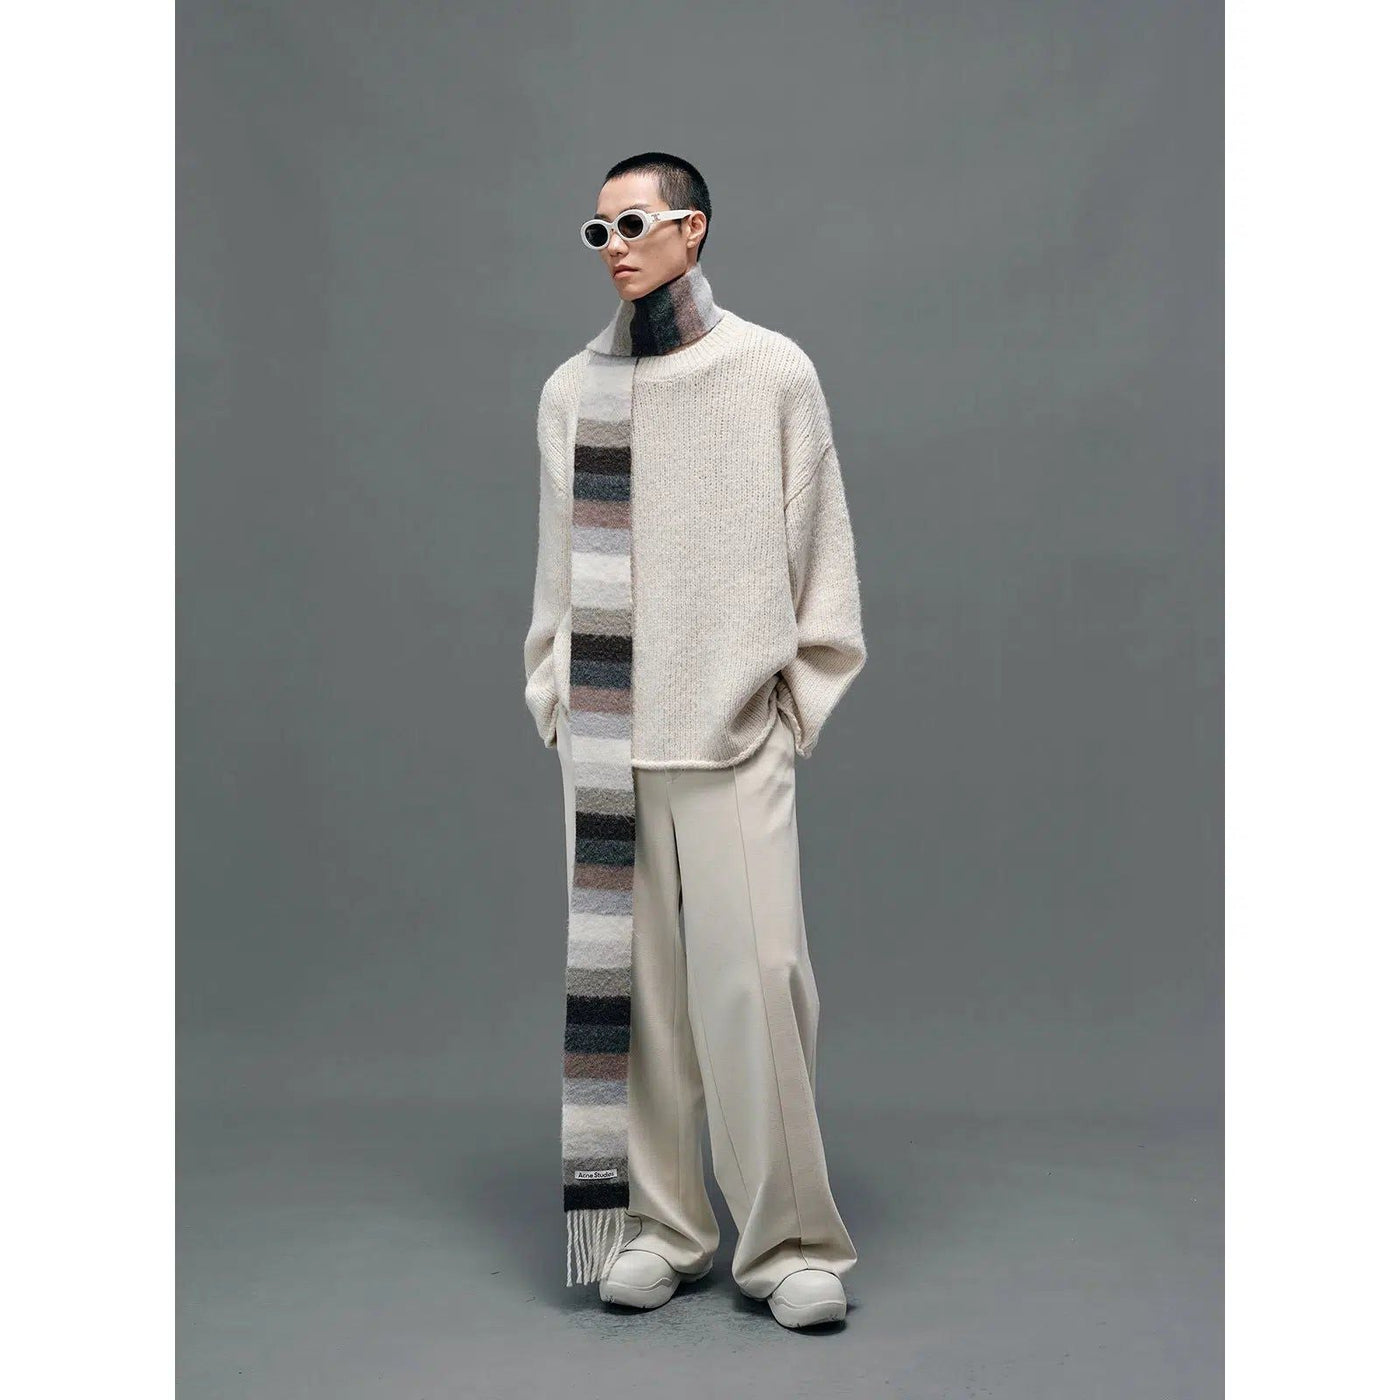 Drop Shoulder Lined Sweater Korean Street Fashion Sweater By NANS Shop Online at OH Vault